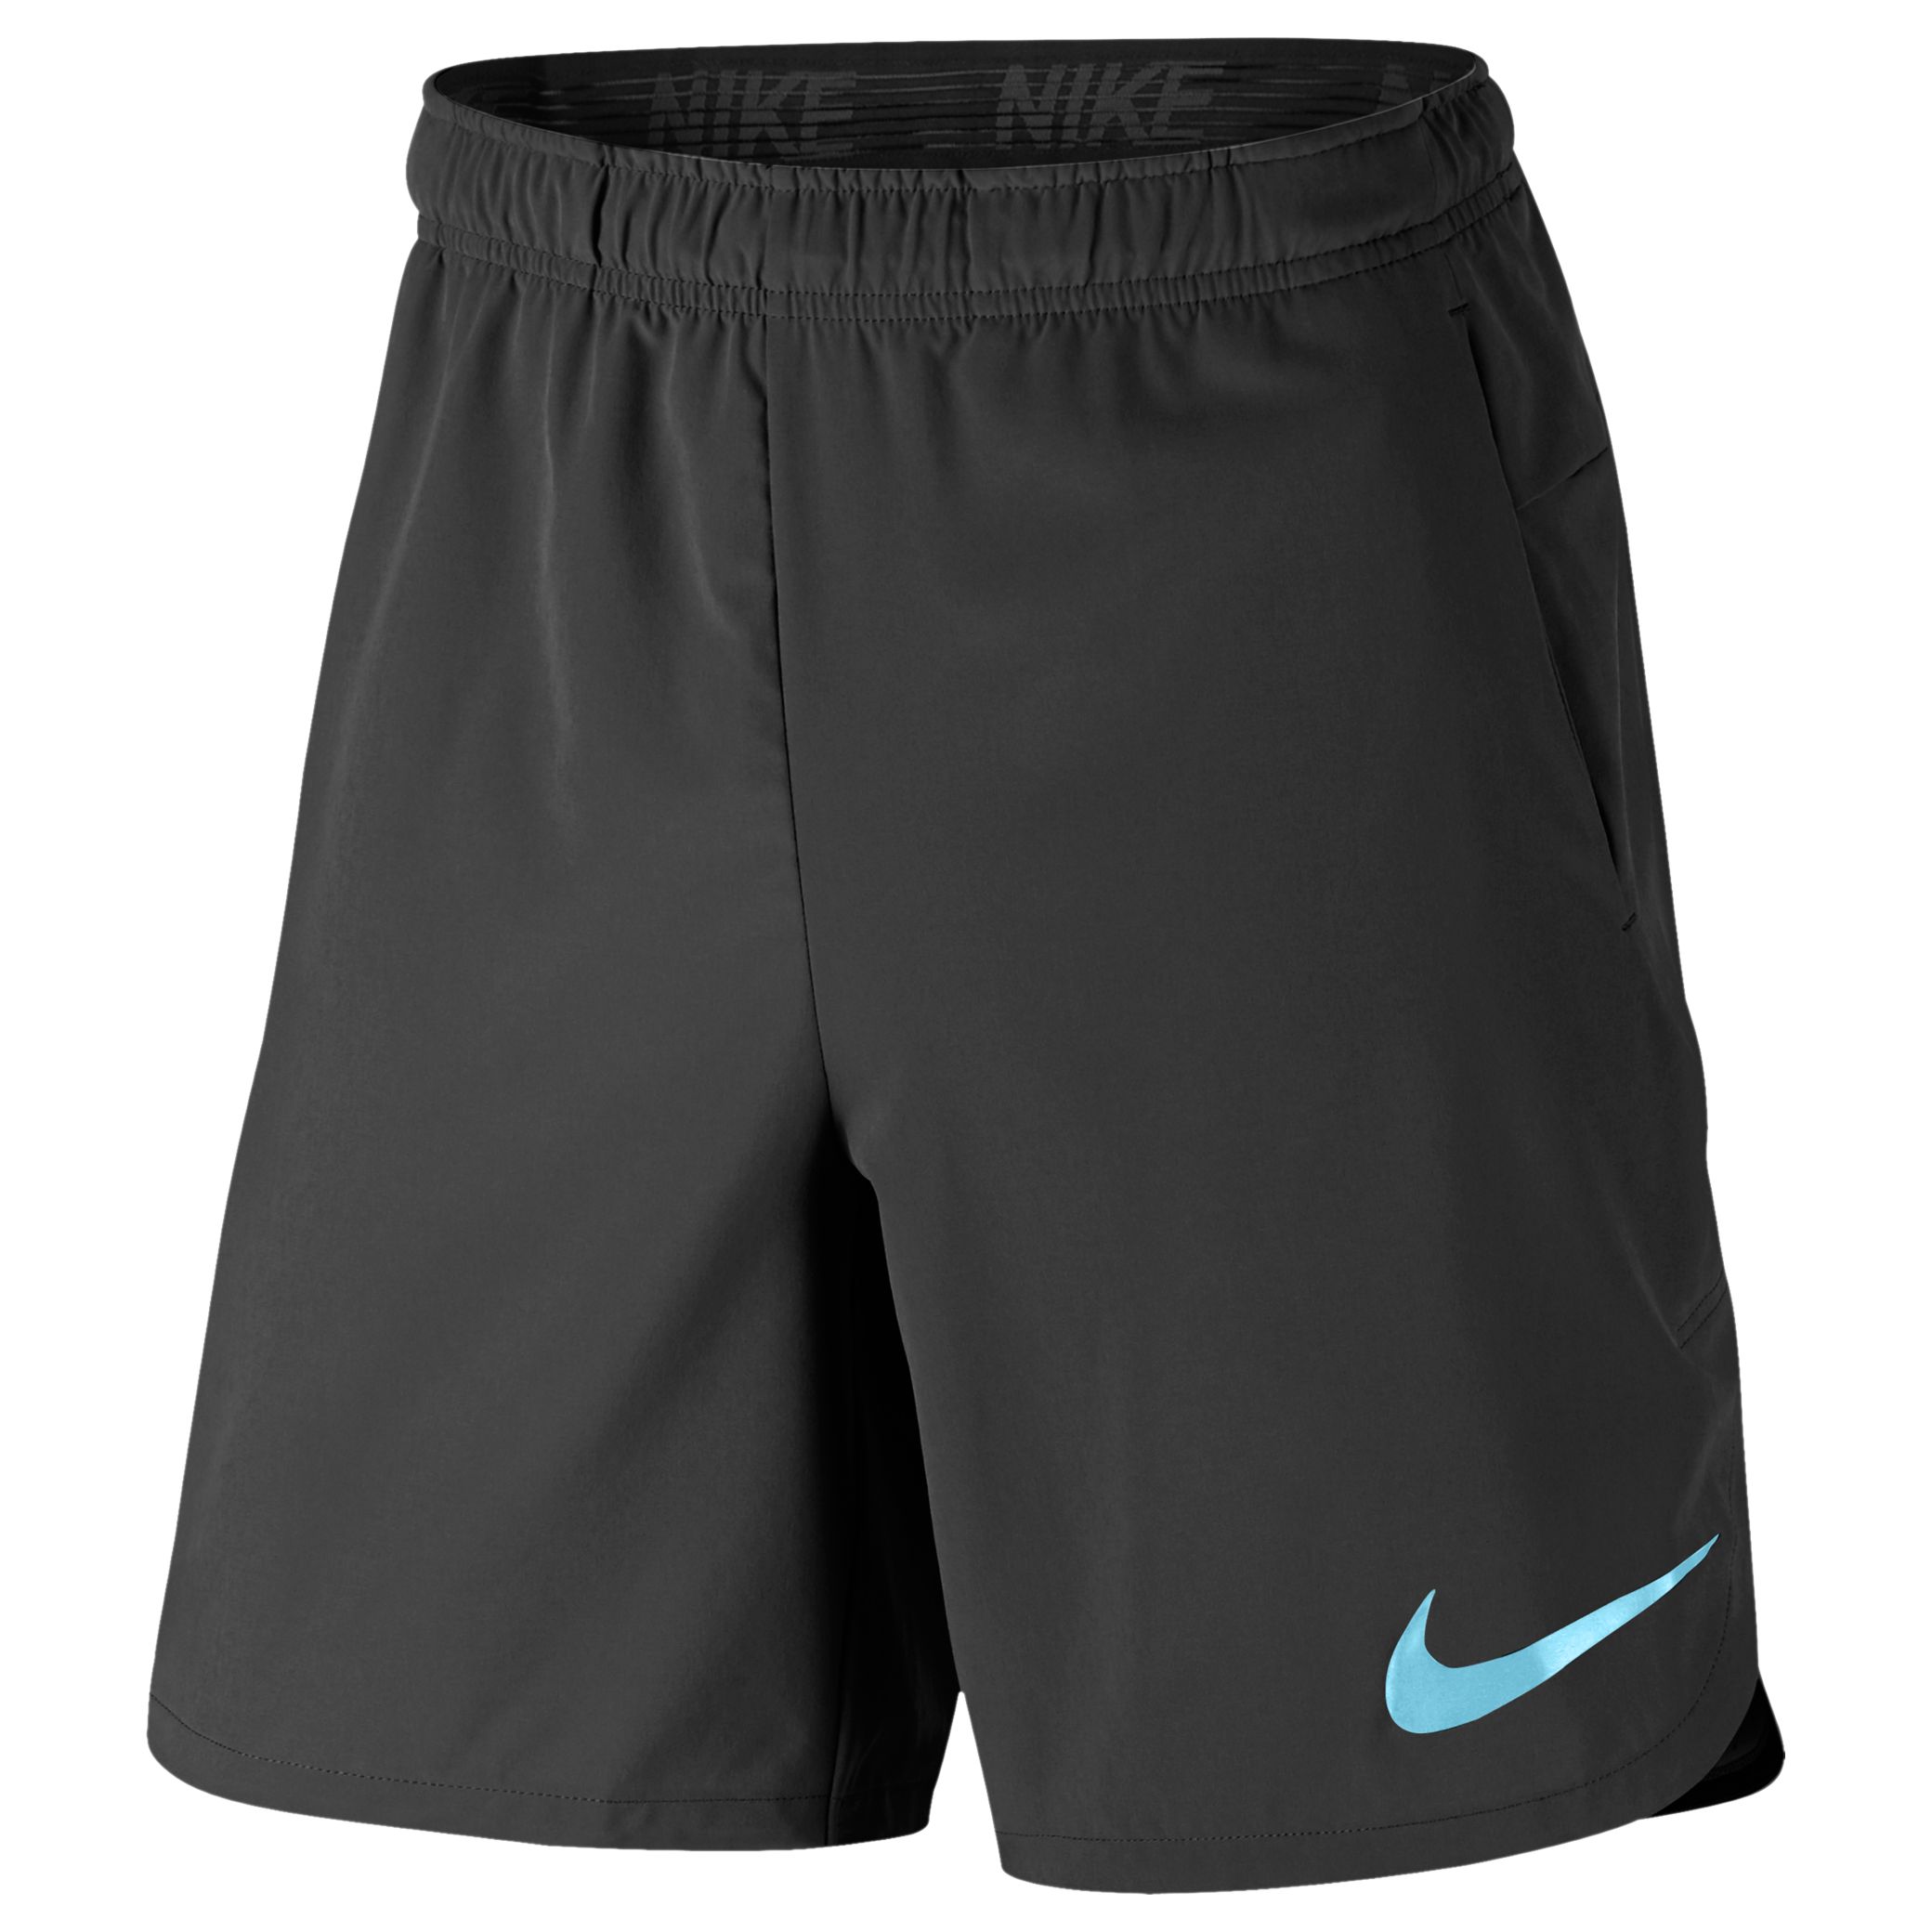 Nike Flex Training Shorts, Black/Blue, XL